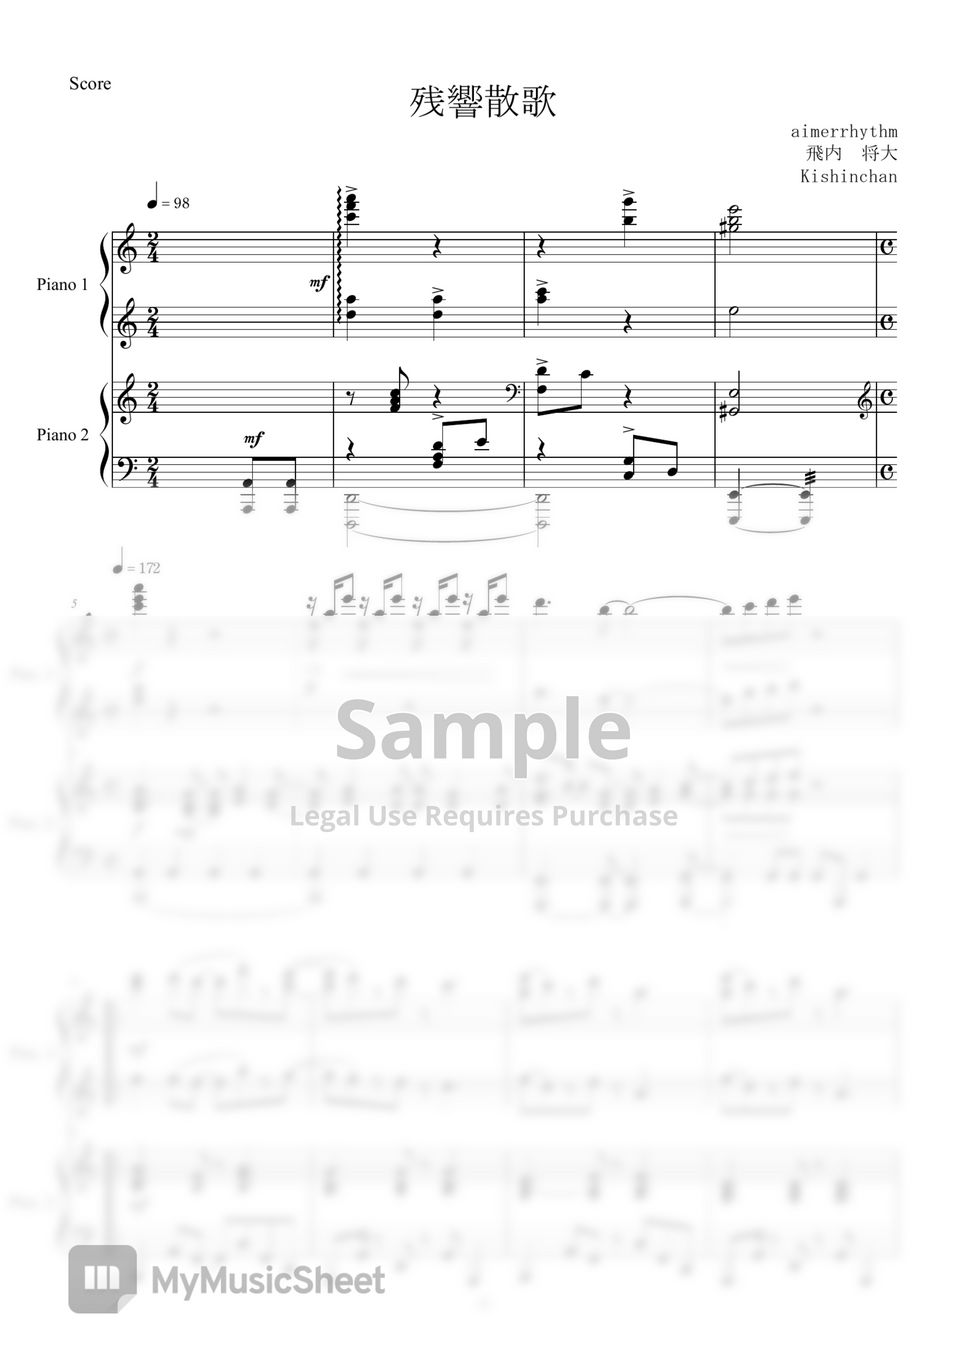 Aimer - 残響散歌 (ピアノ連弾、中級) by kishinchan